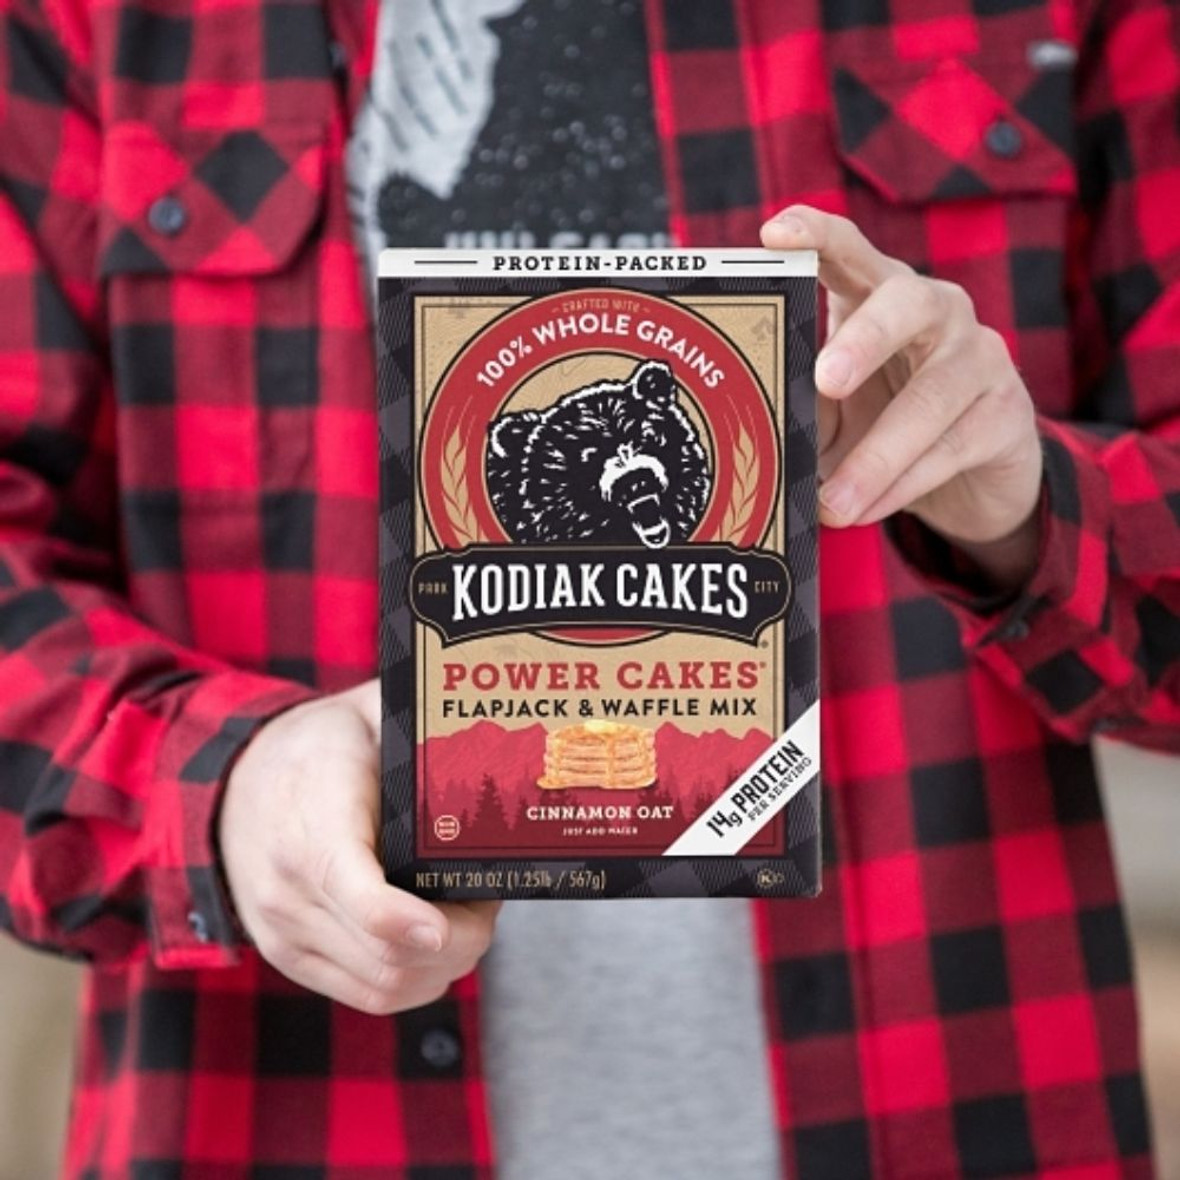 Kodiak Cakes Cinnamon Oat Flapjack Power Cakes